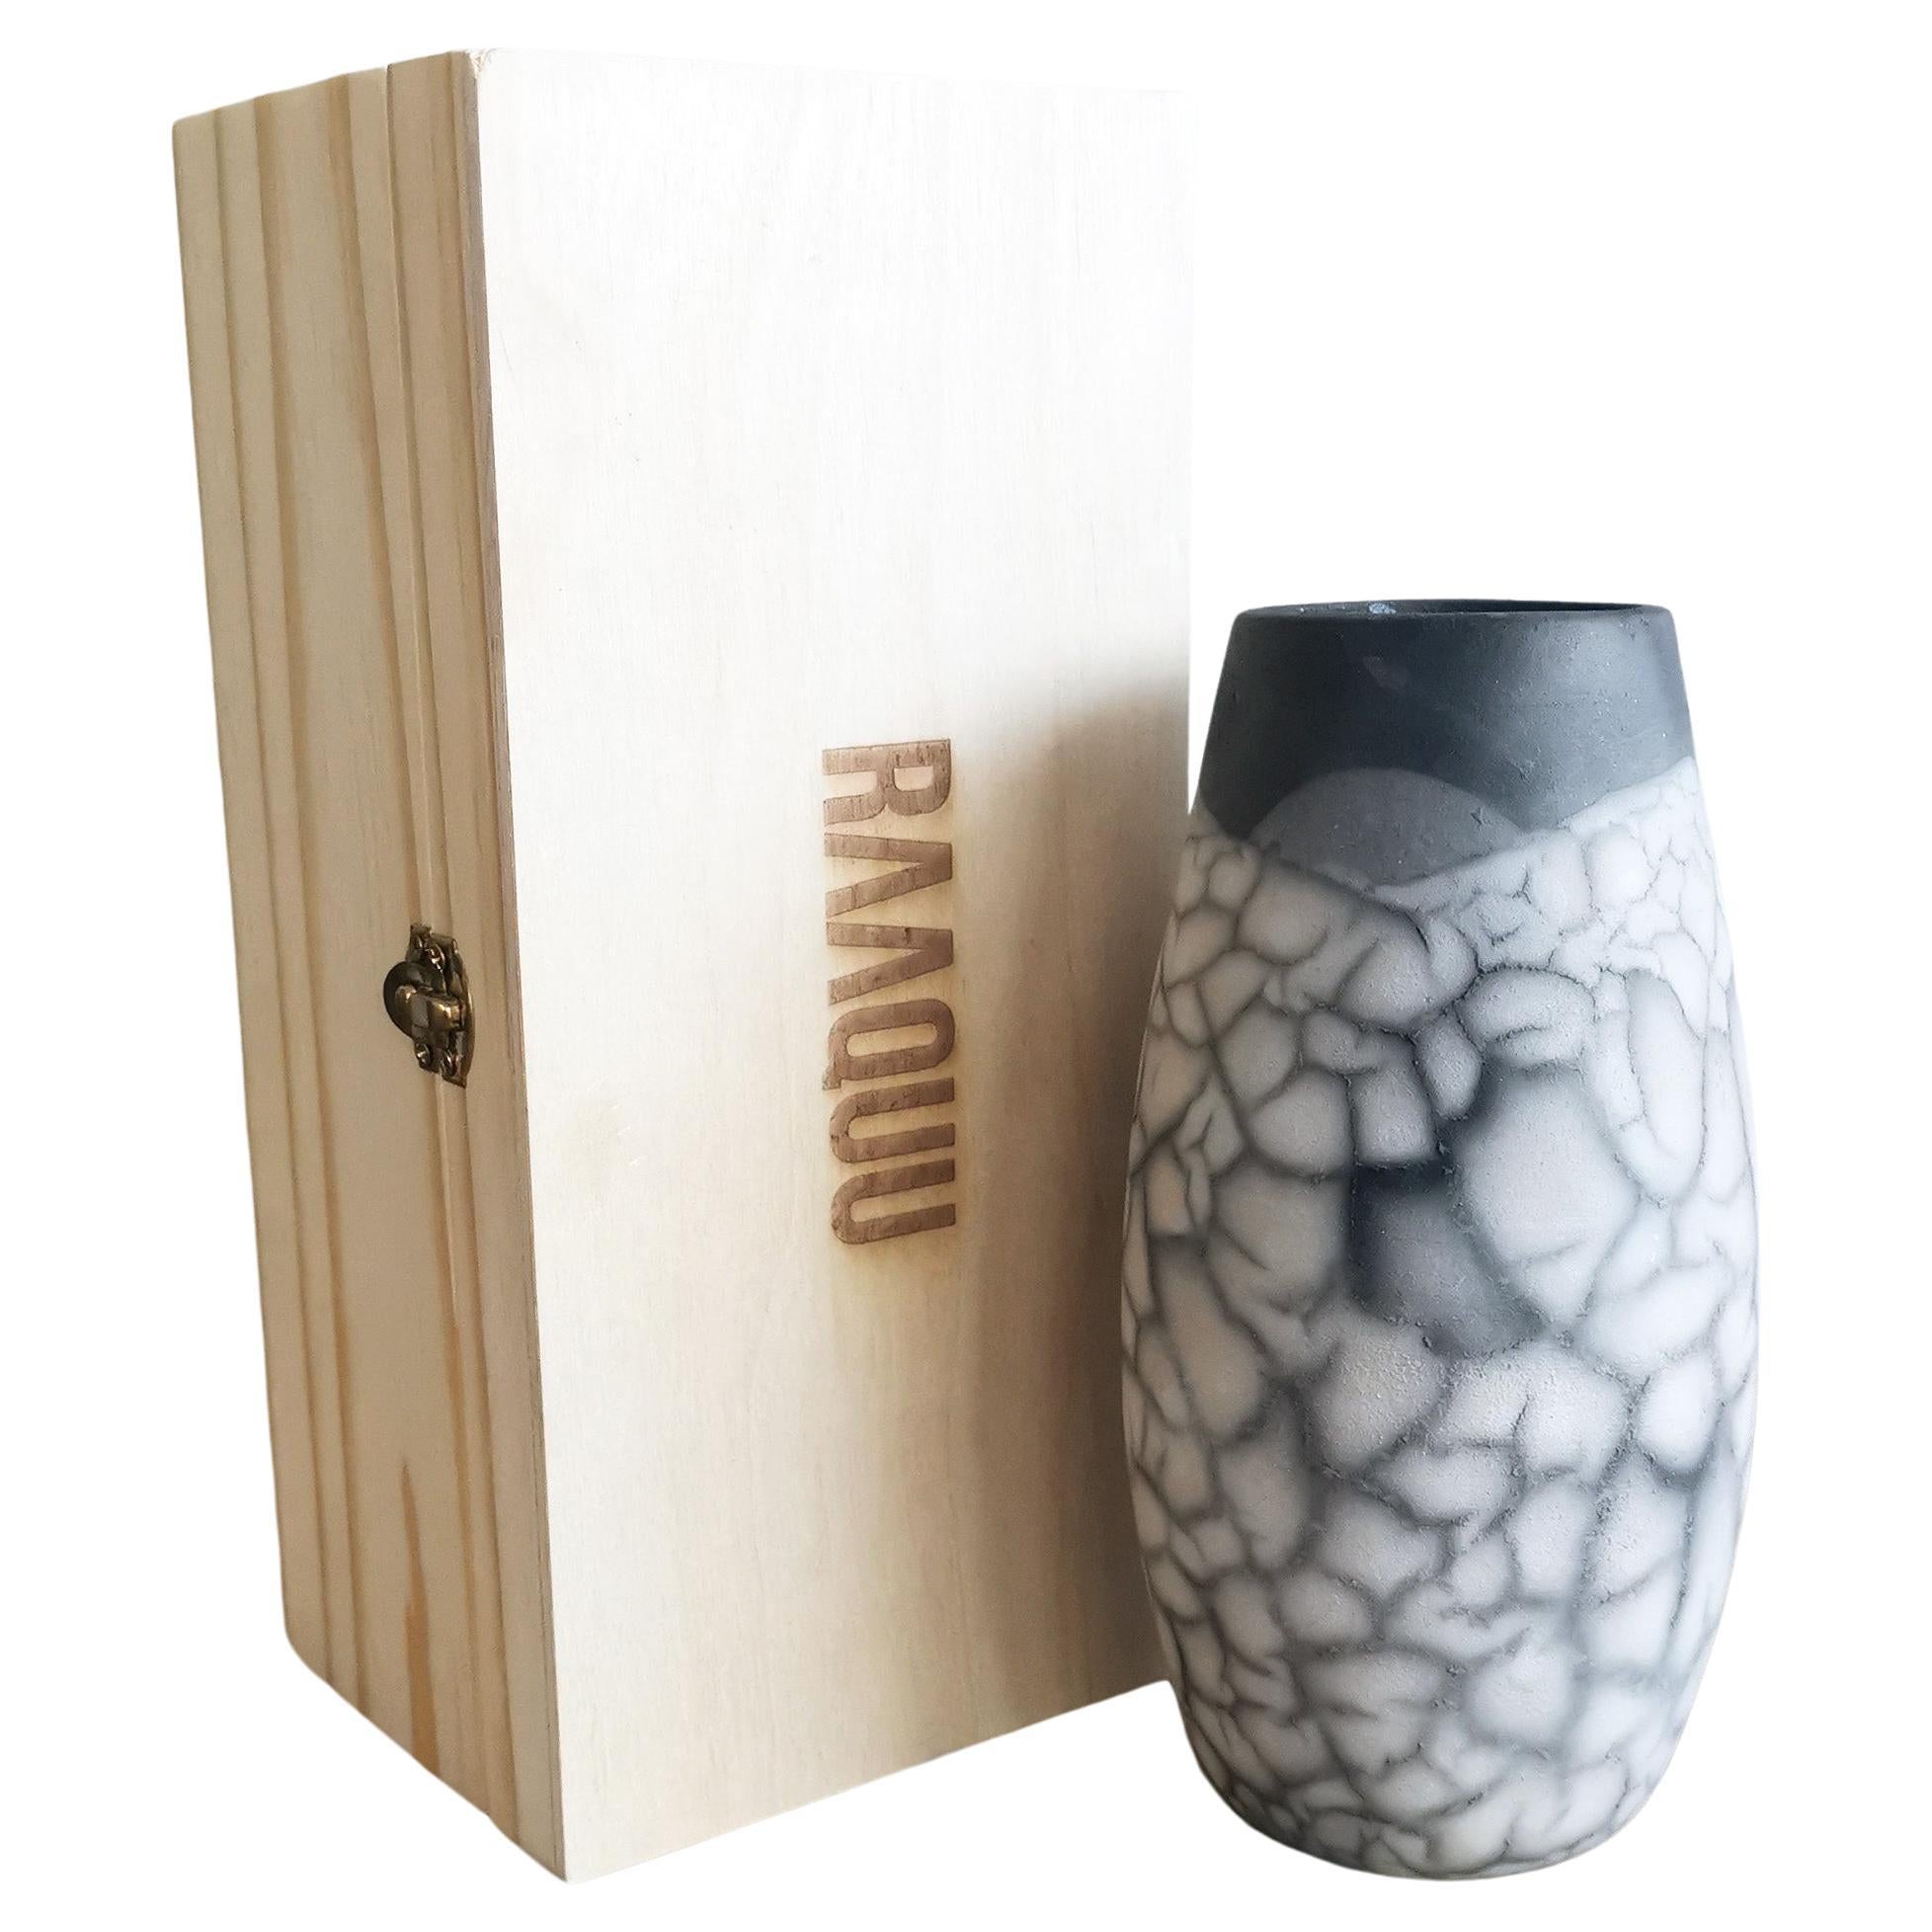 Tsuri Raku-Keramikvase mit Geschenkschachtel, Rauch Raku, handgefertigte Keramik